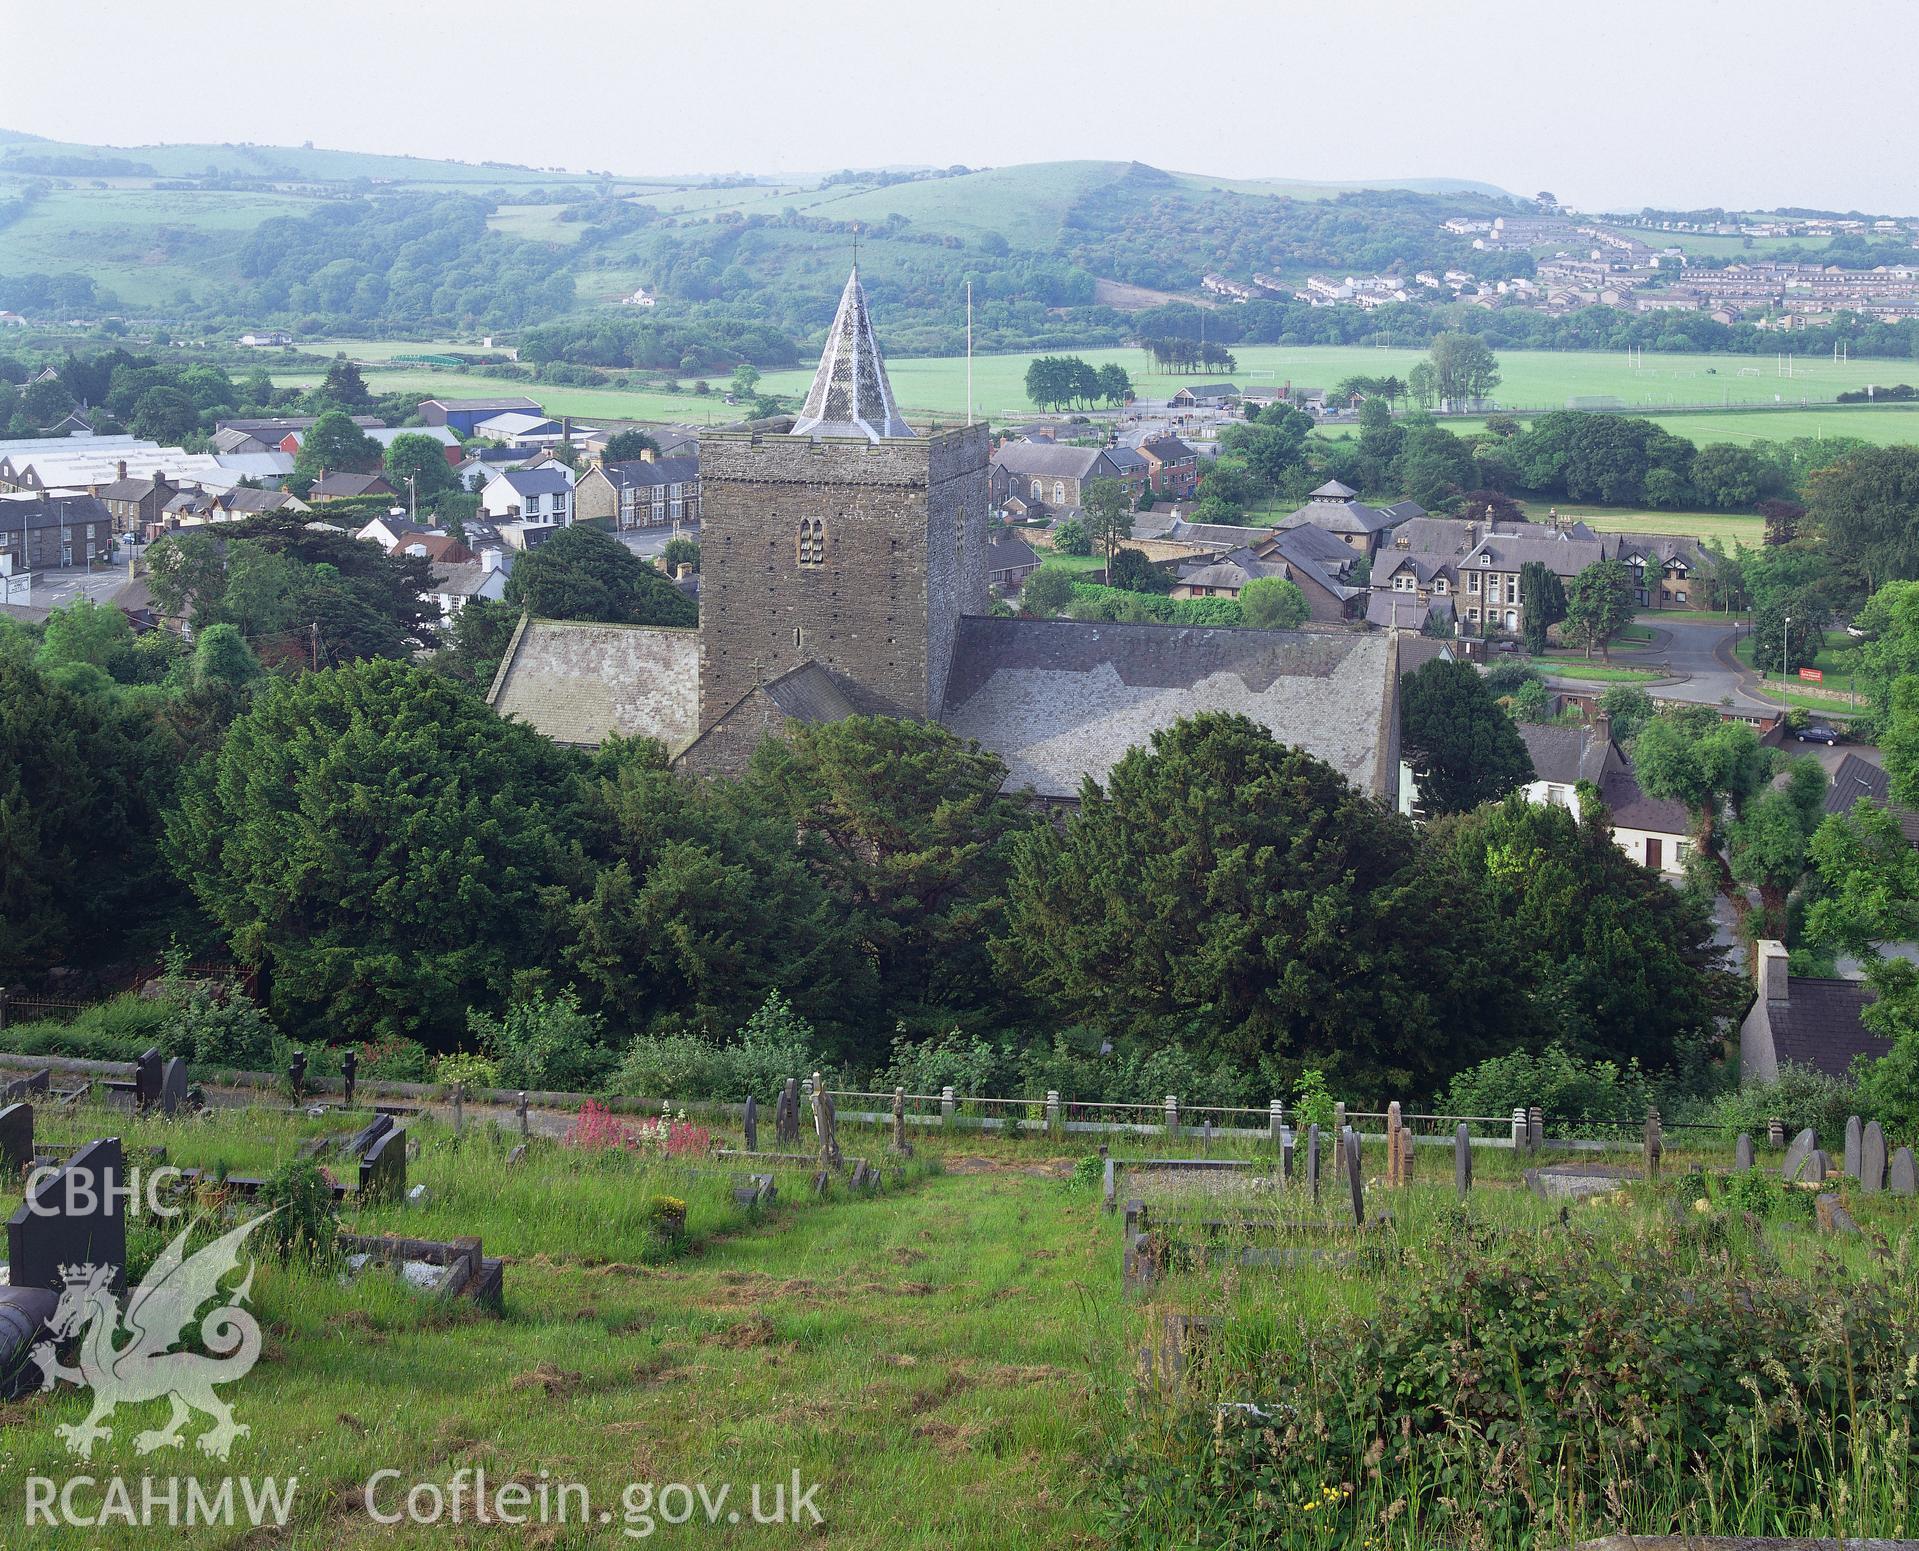 RCAHMW colour transparency showing exterior view of St Padarn's Church, Llanbadarn Fawr.